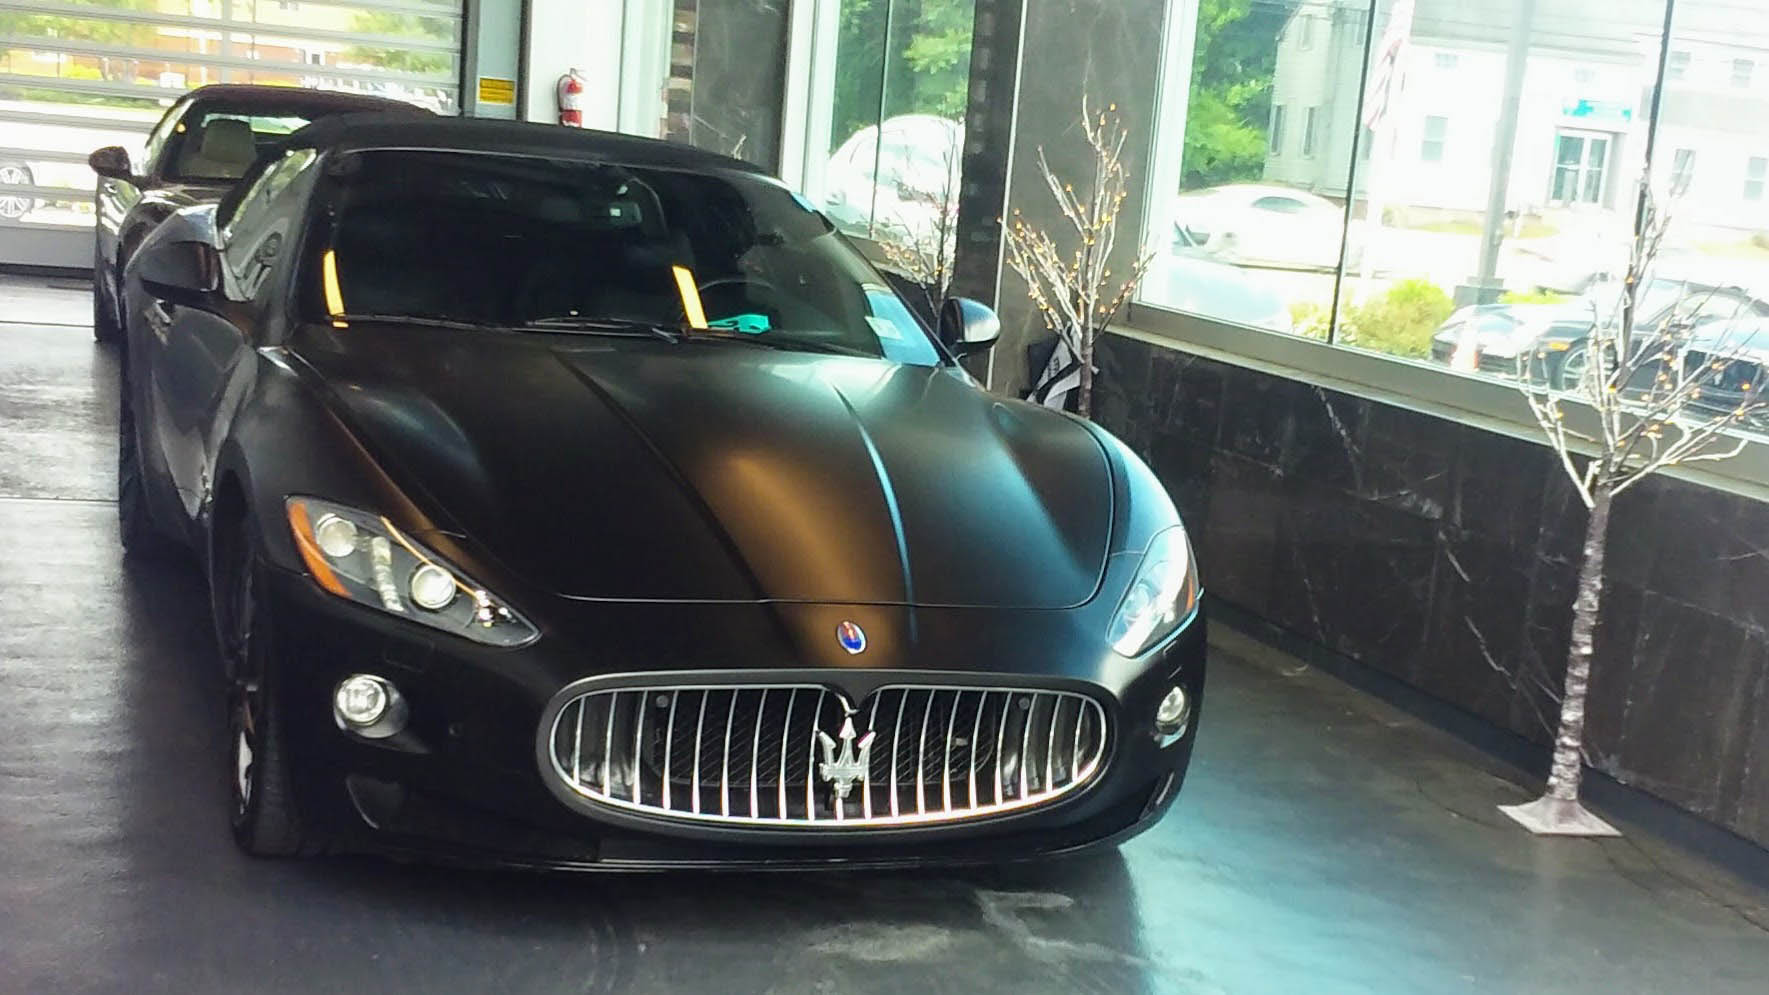 Matte Black Maserati